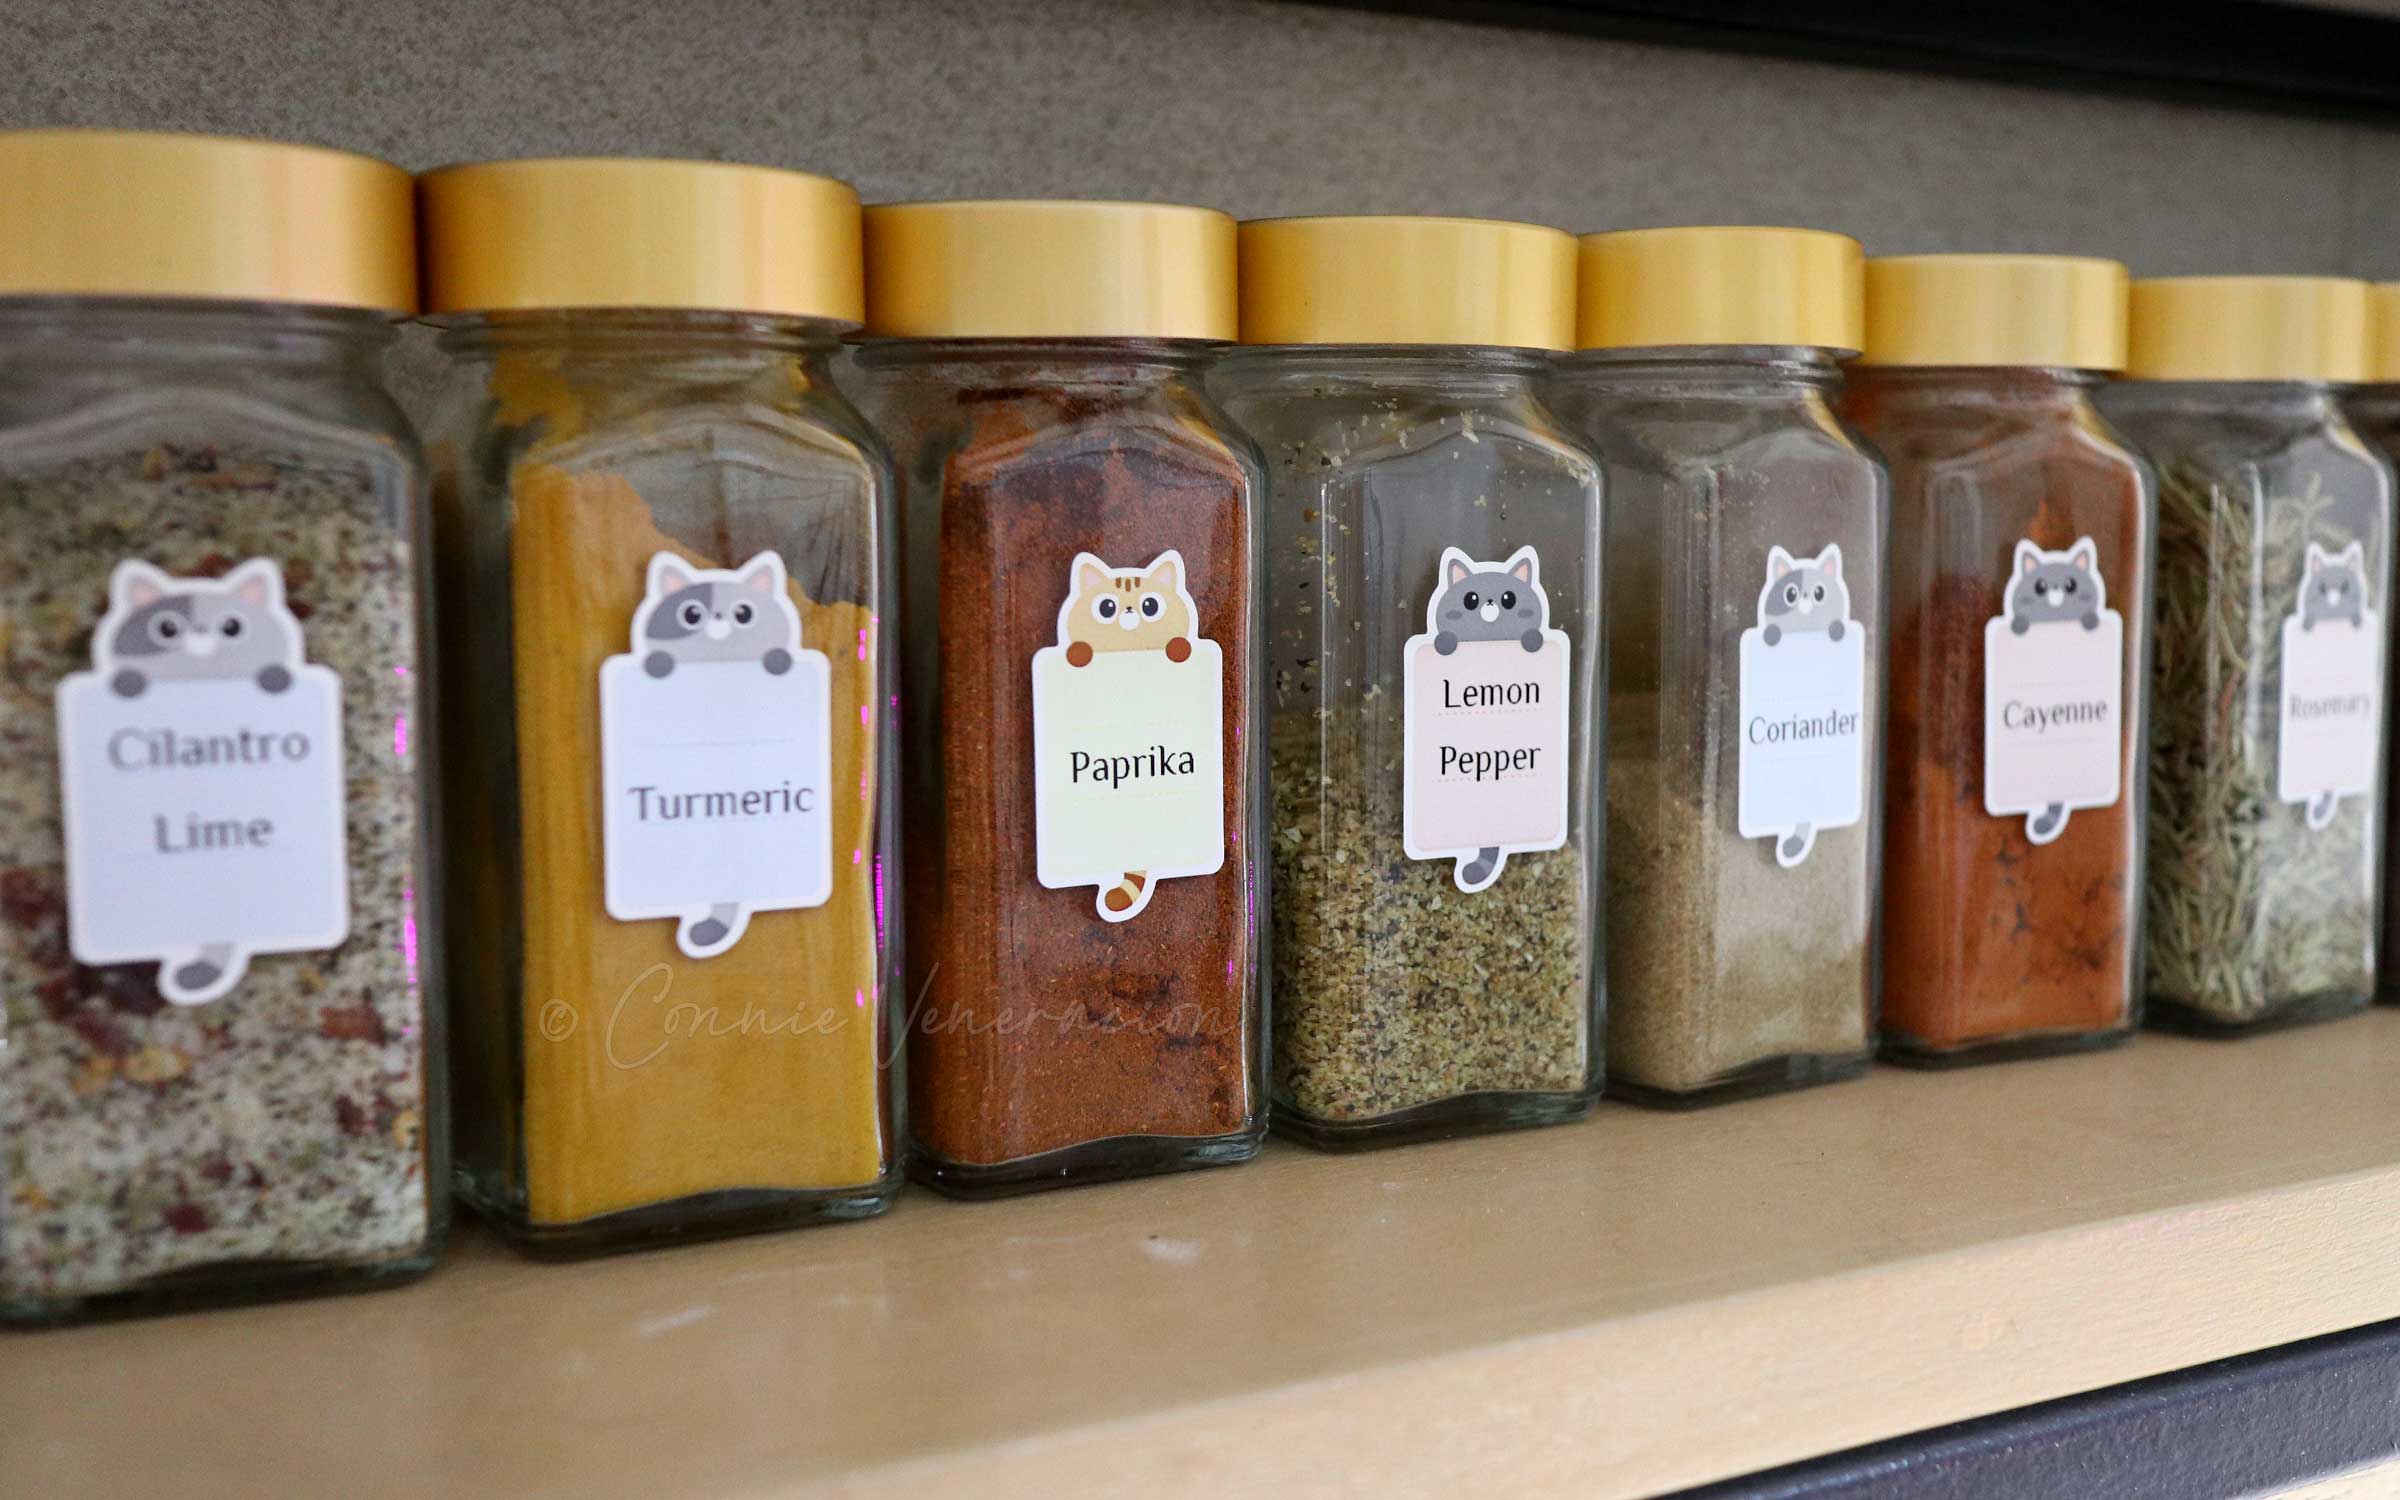 Simple DIY Spice Jar Labels For Your Kitchen